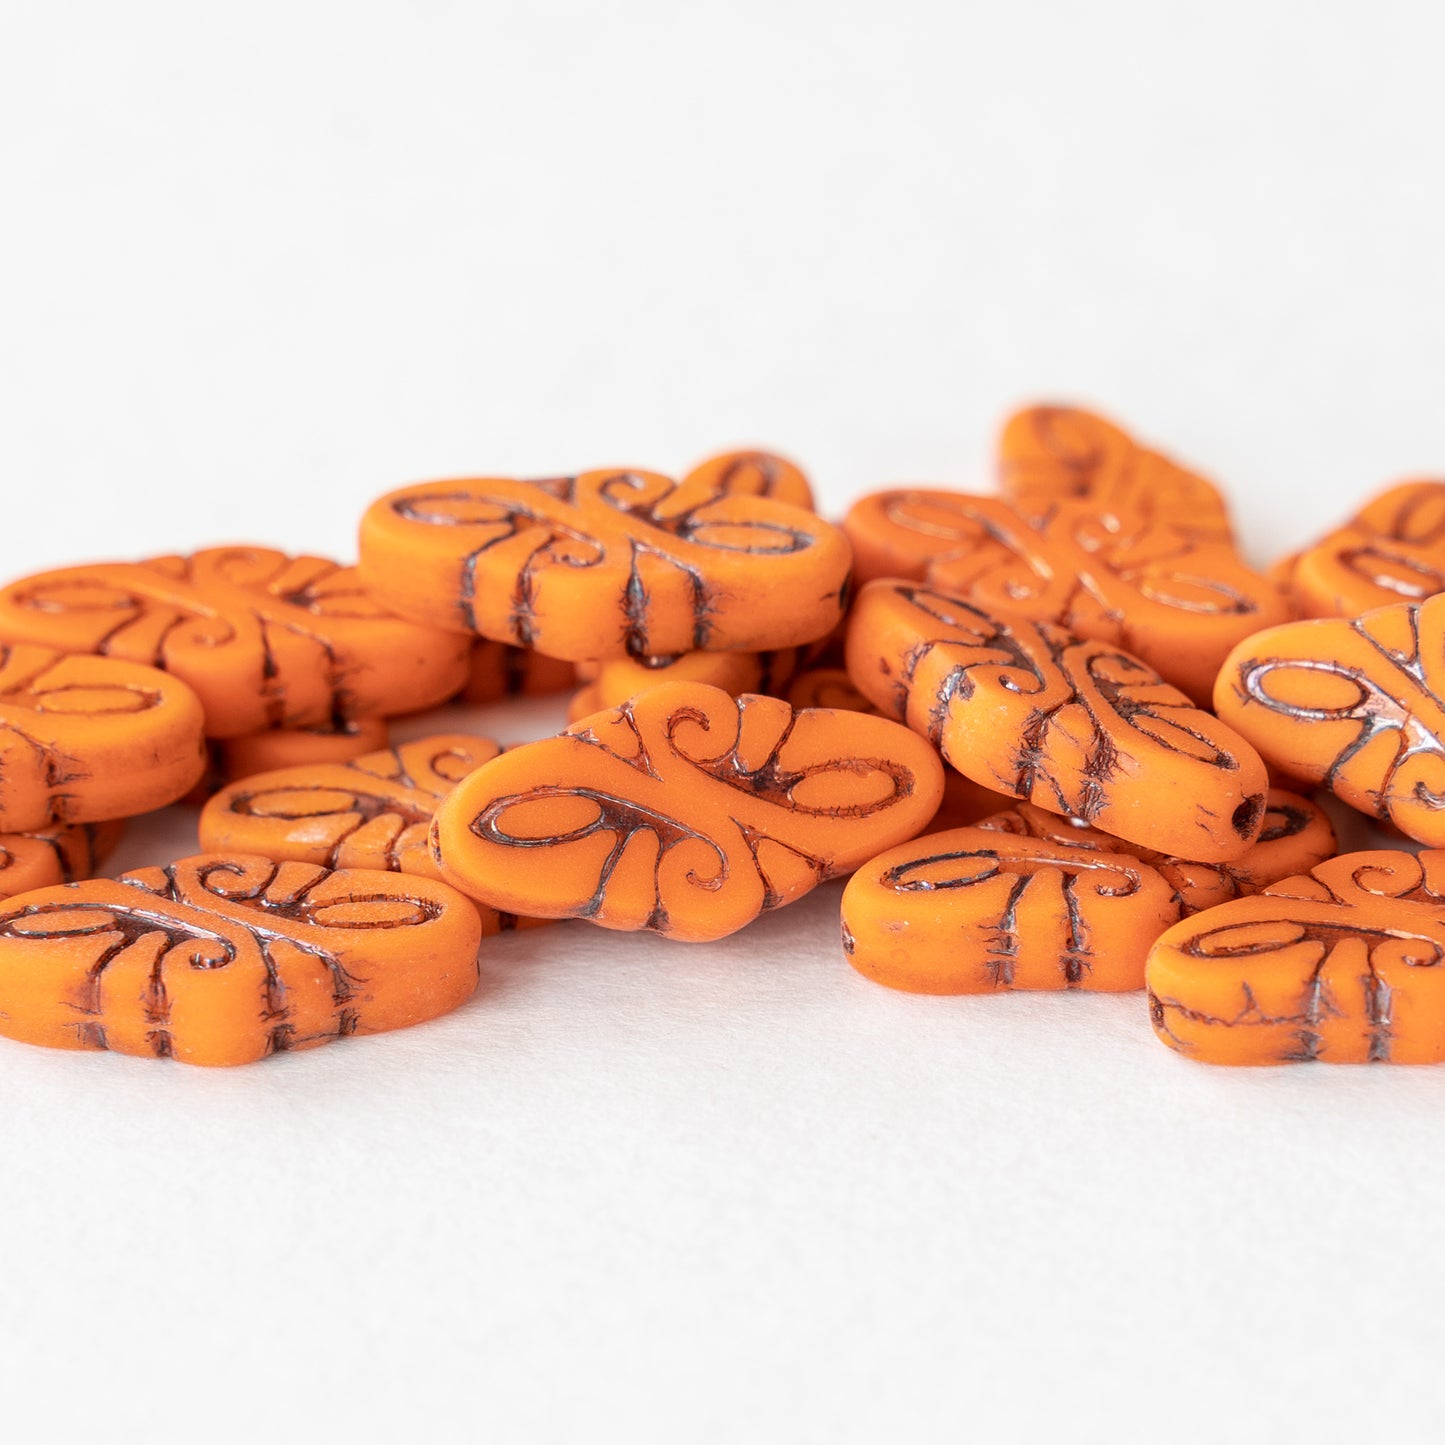 9x19mm Arabesque Beads - Orange - 10 or 30